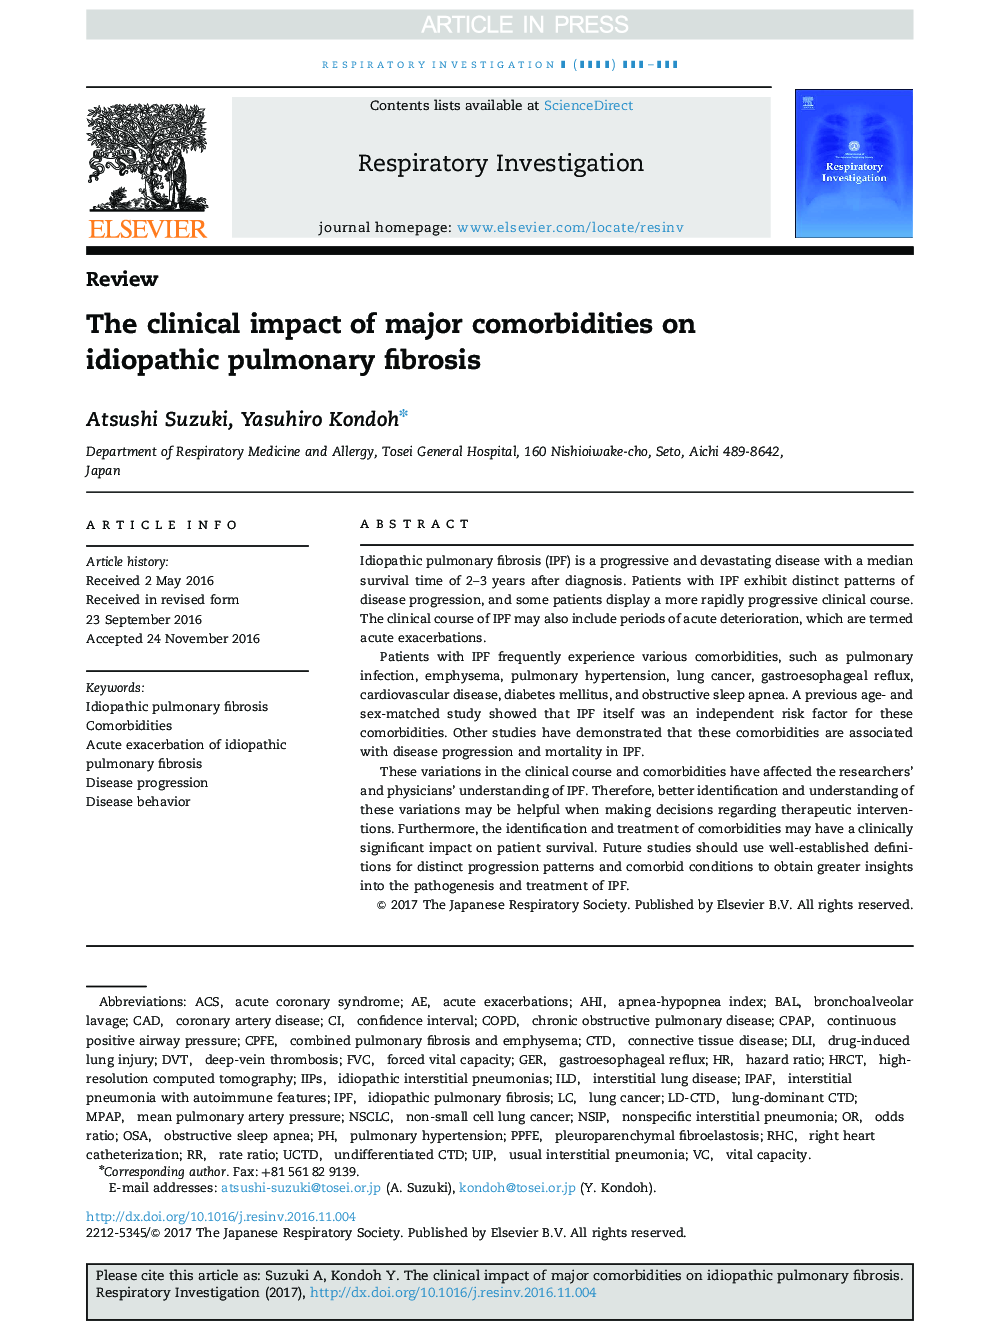 The clinical impact of major comorbidities on idiopathic pulmonary fibrosis